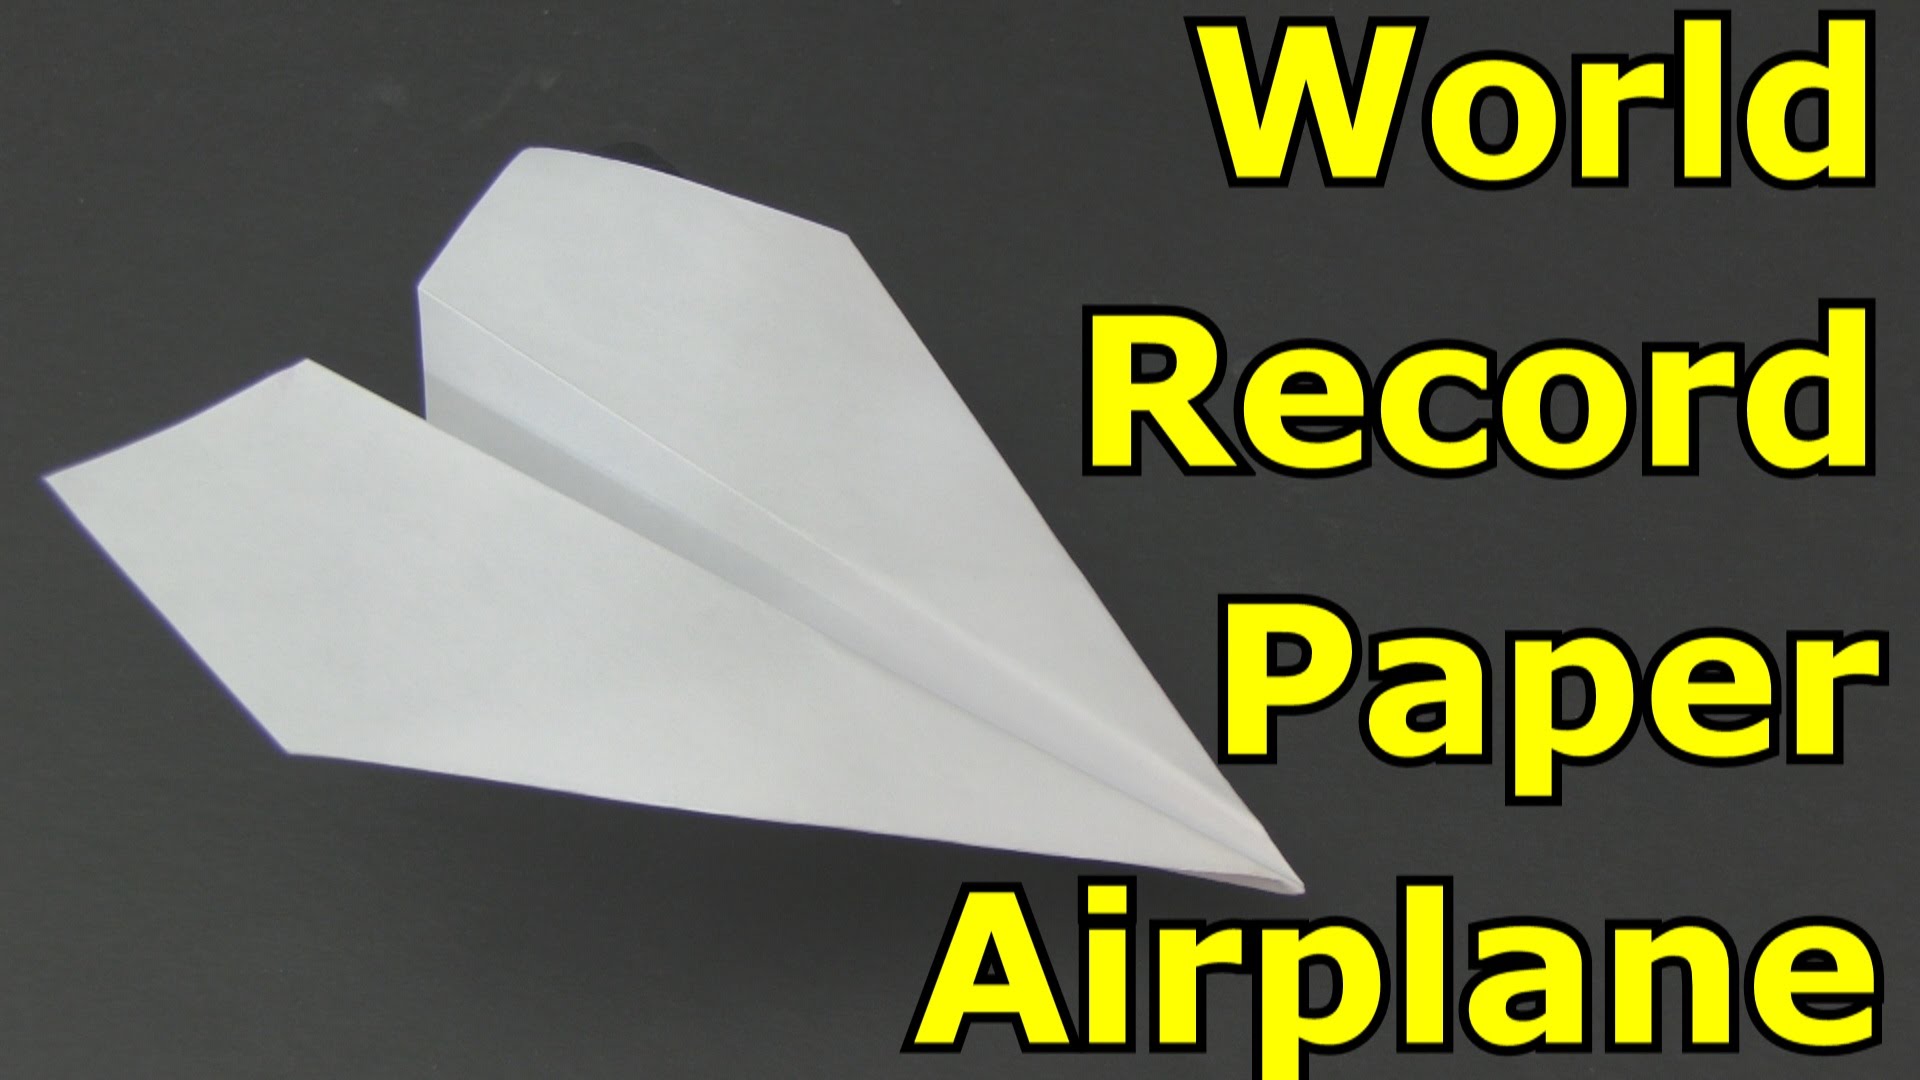 World record paper airplane retykc